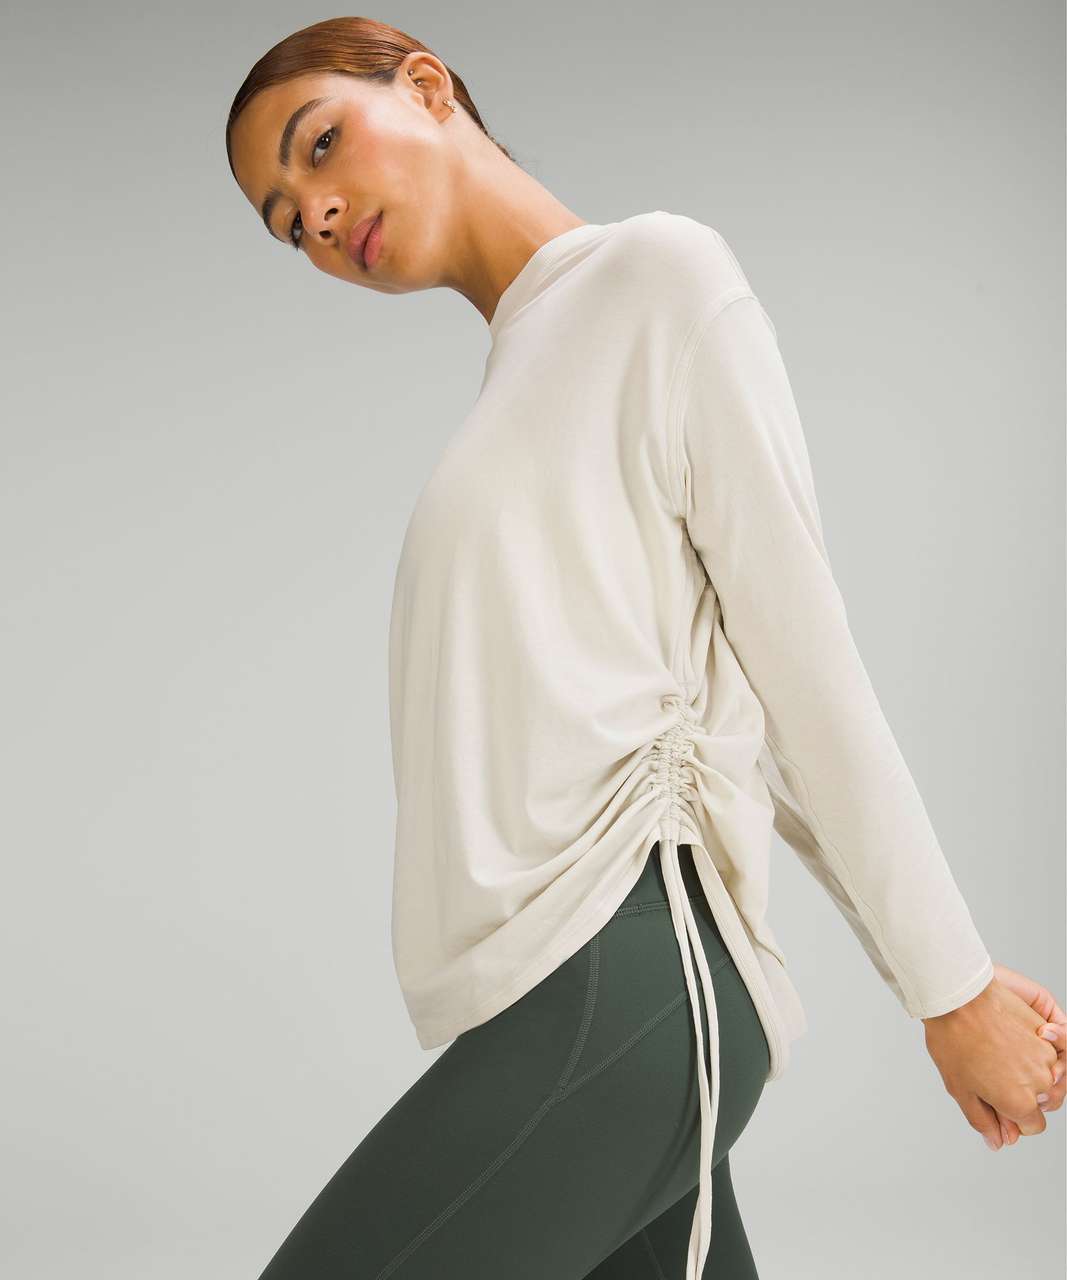 Pima Cotton Side-Cinch Long-Sleeve Shirt